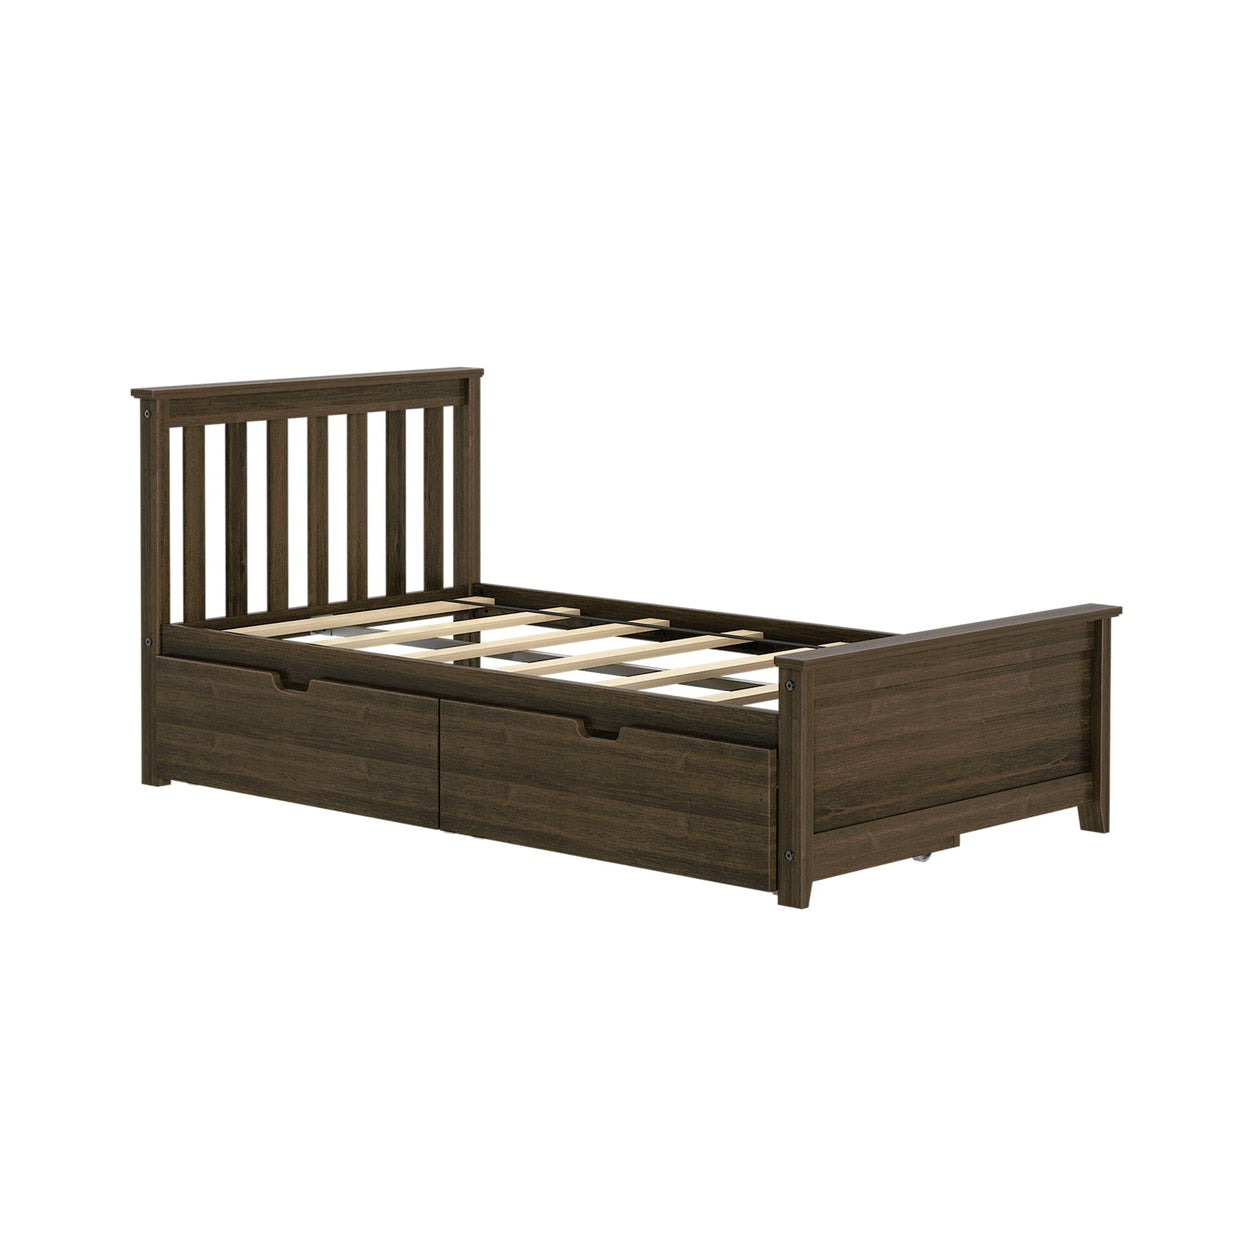 187210-008 : Kids Beds Twin-Size Platform with Underbed Storage Drawers, Walnut